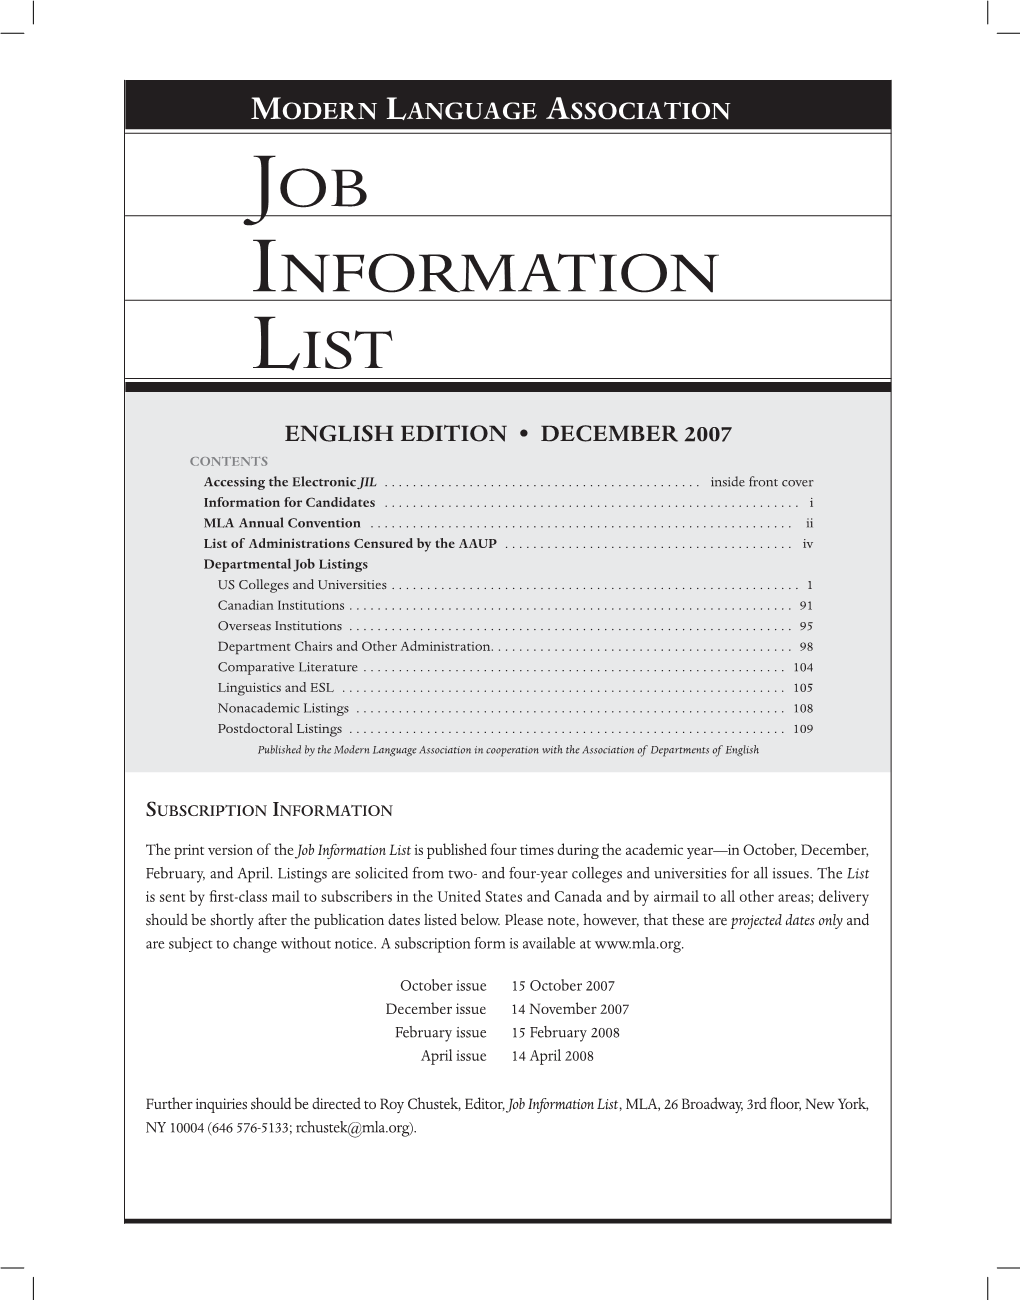 Job Information List